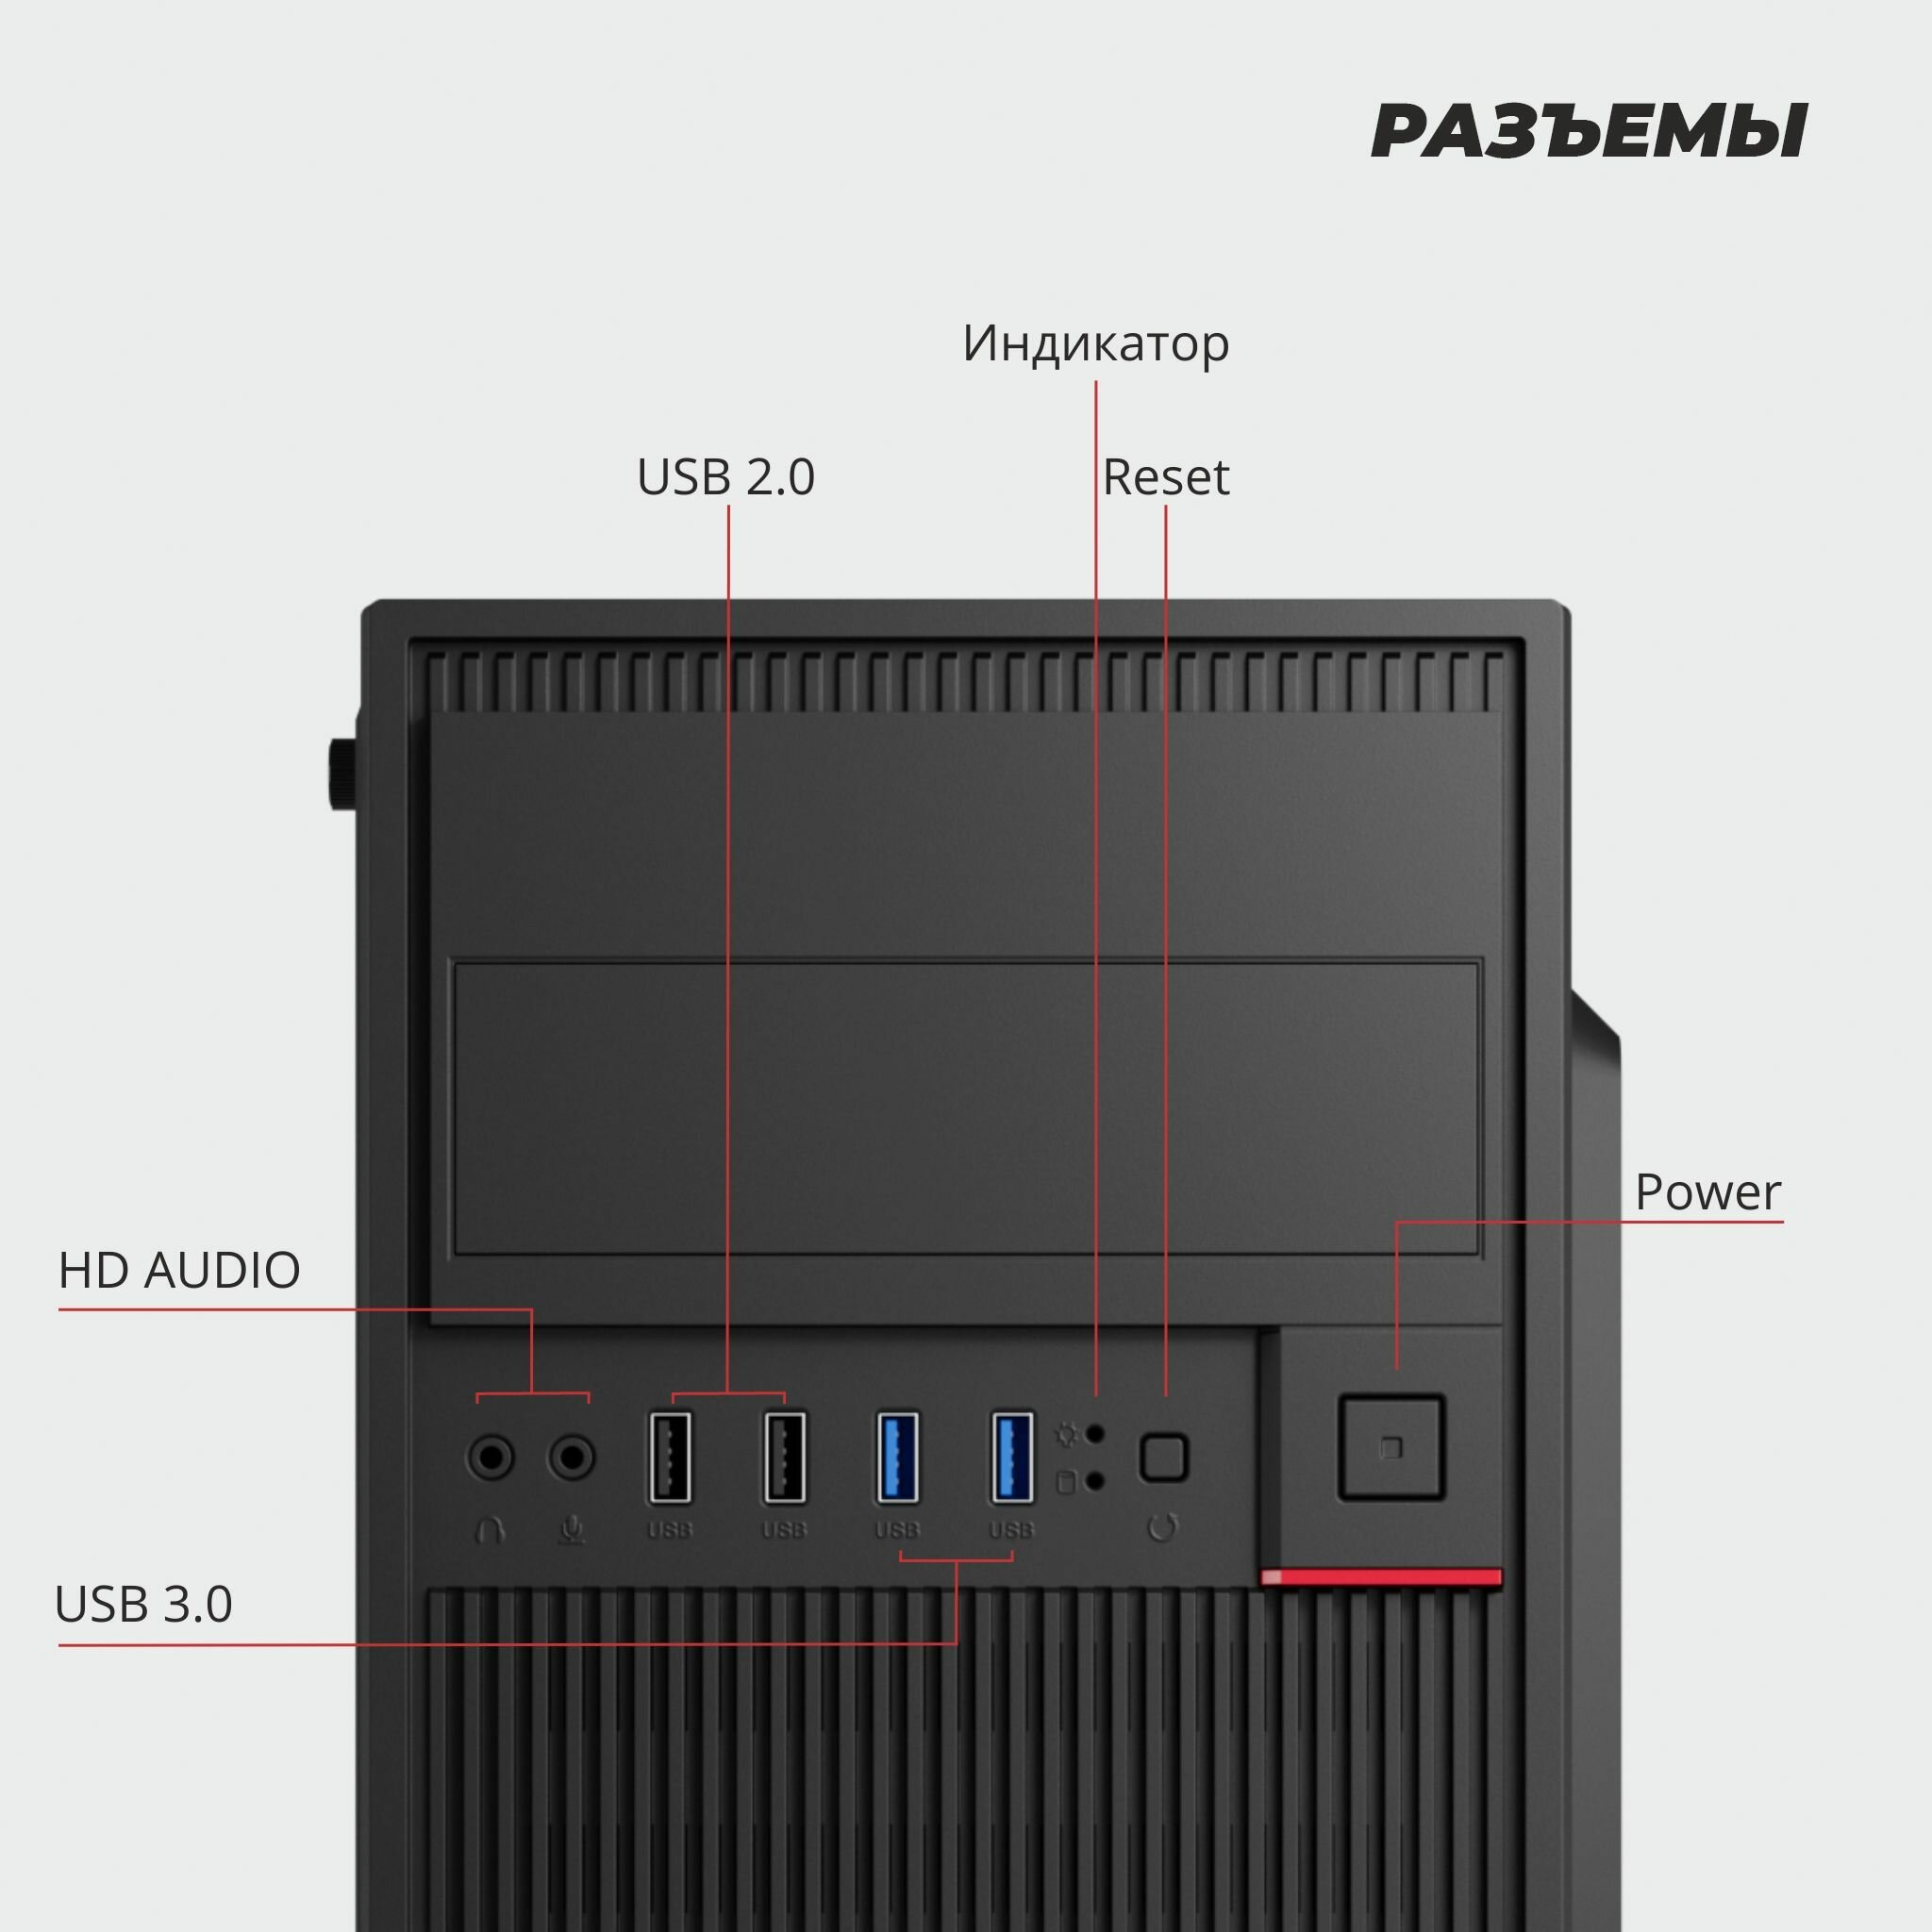 Корпус Prime Box S707 (2 - USB 2.0, 2 - USB 3.0), ATX / Micro-ATX / Mini-ITX